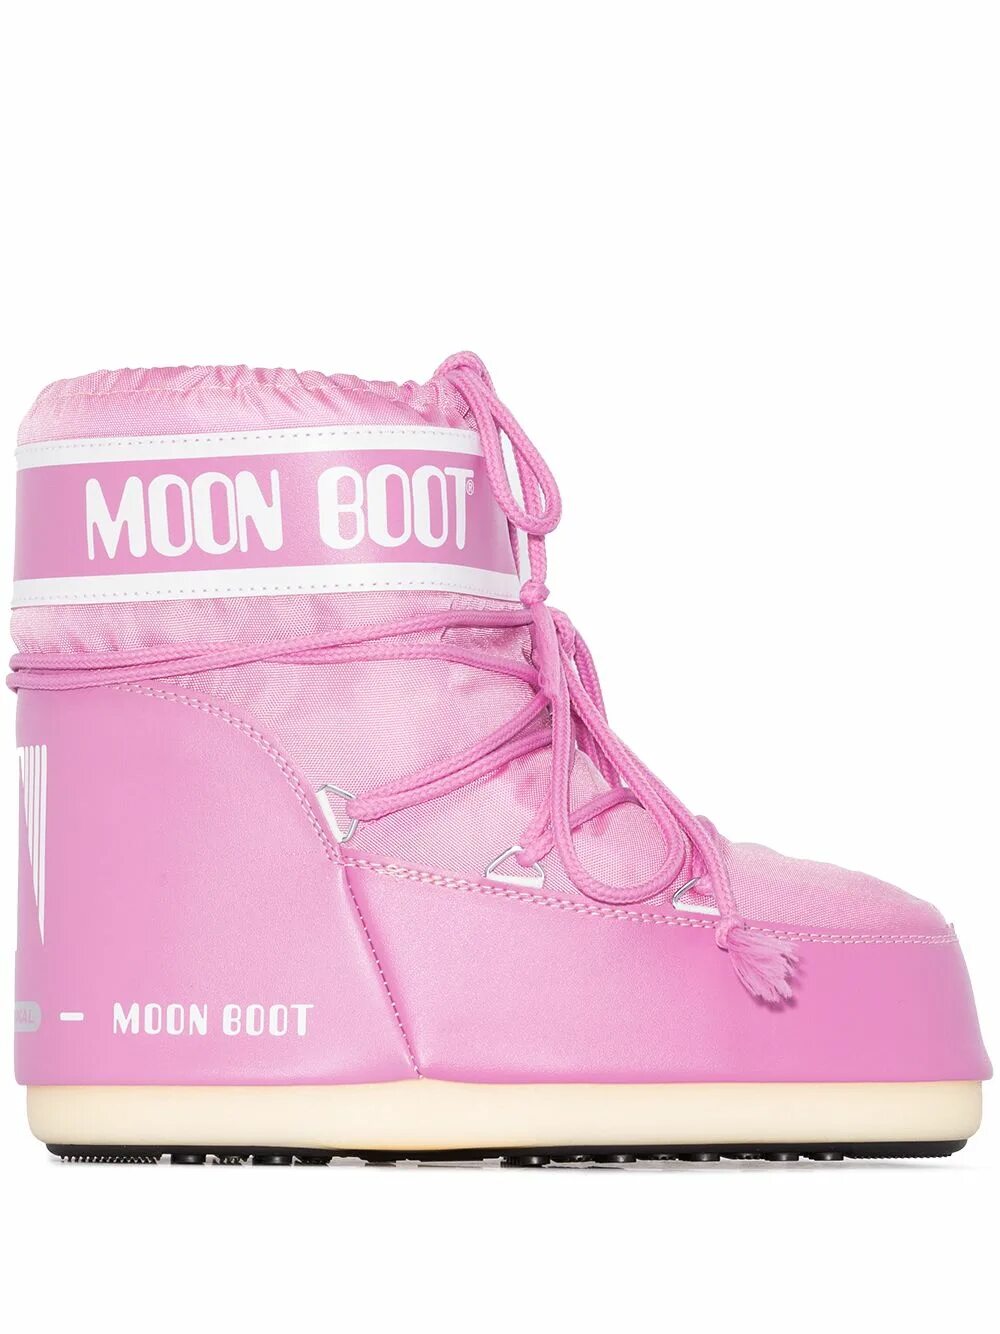 Обувь муна. Обувь Moon Boot. Ботинки Moon Boot Low. Луноходы Moon Boot. Moon Boot женские розовые.